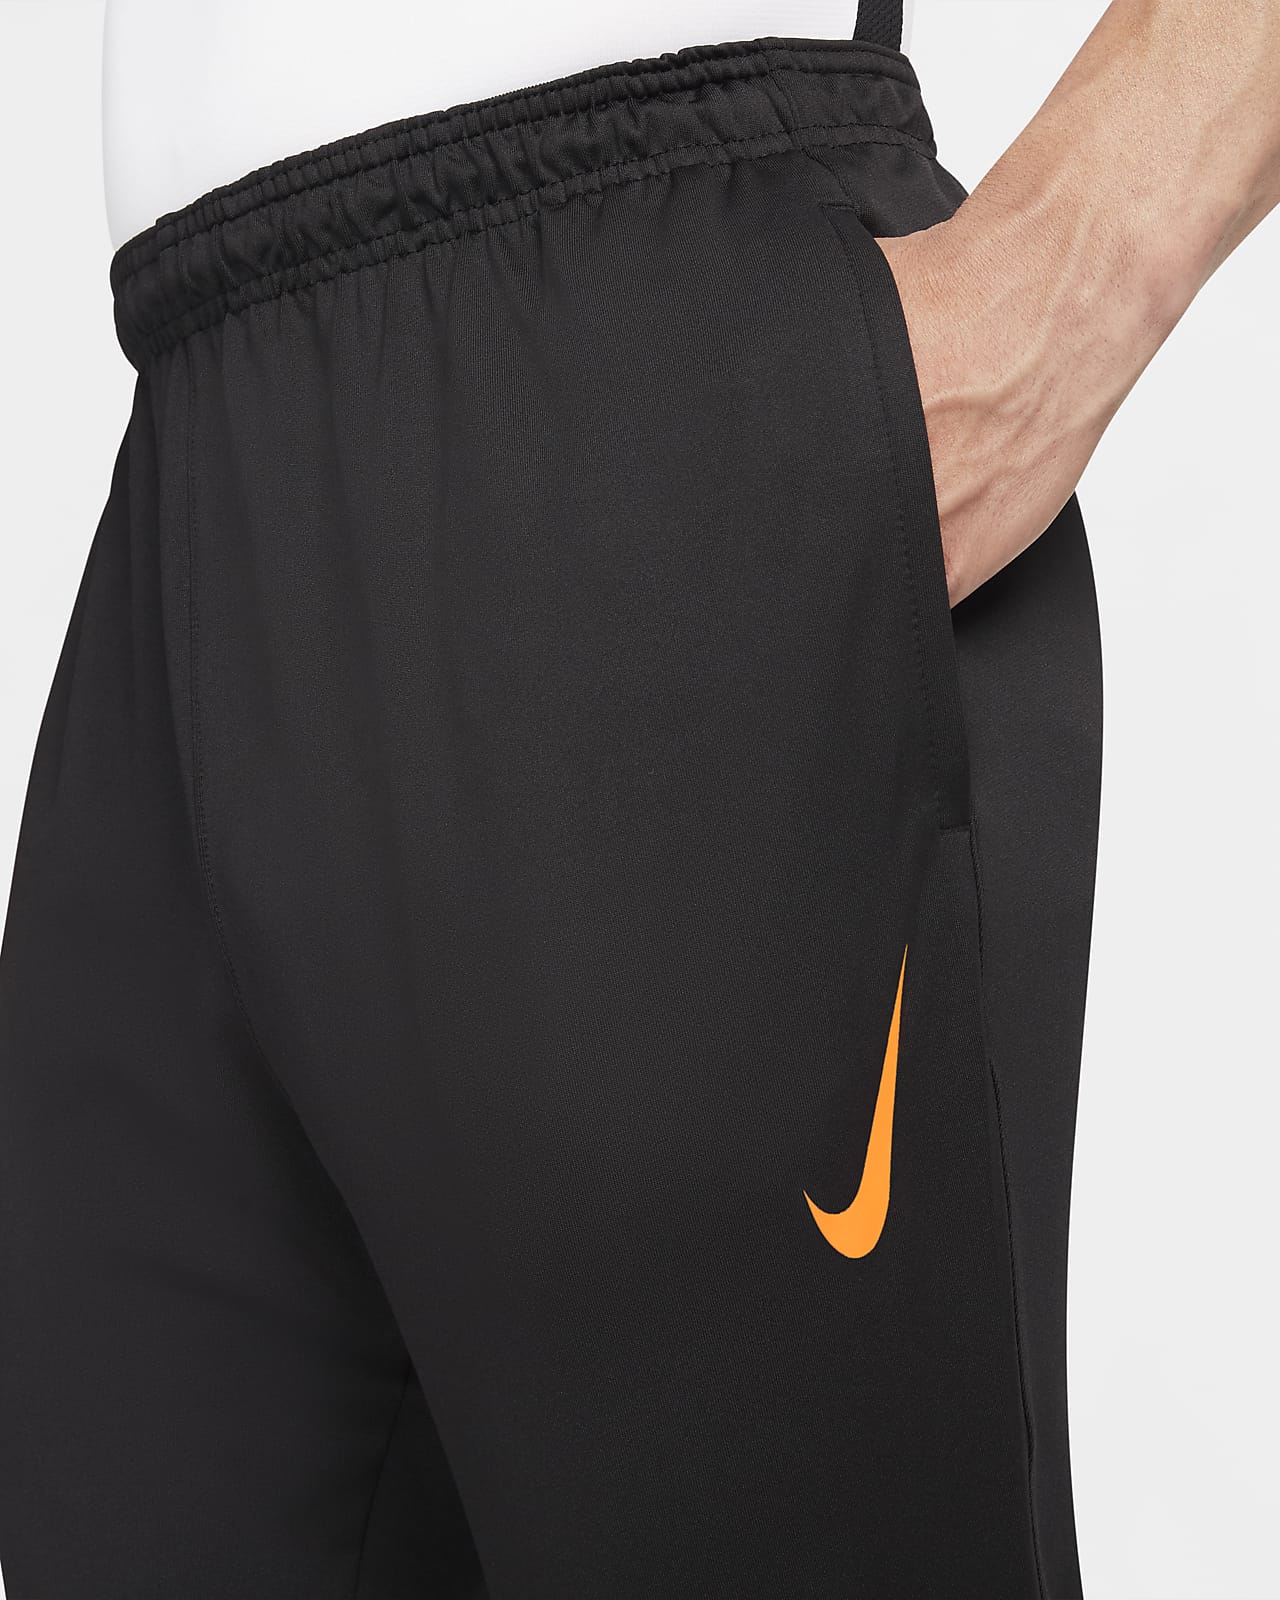 Nike Therma-FIT Strike Winter Warrior Men's Soccer Pants